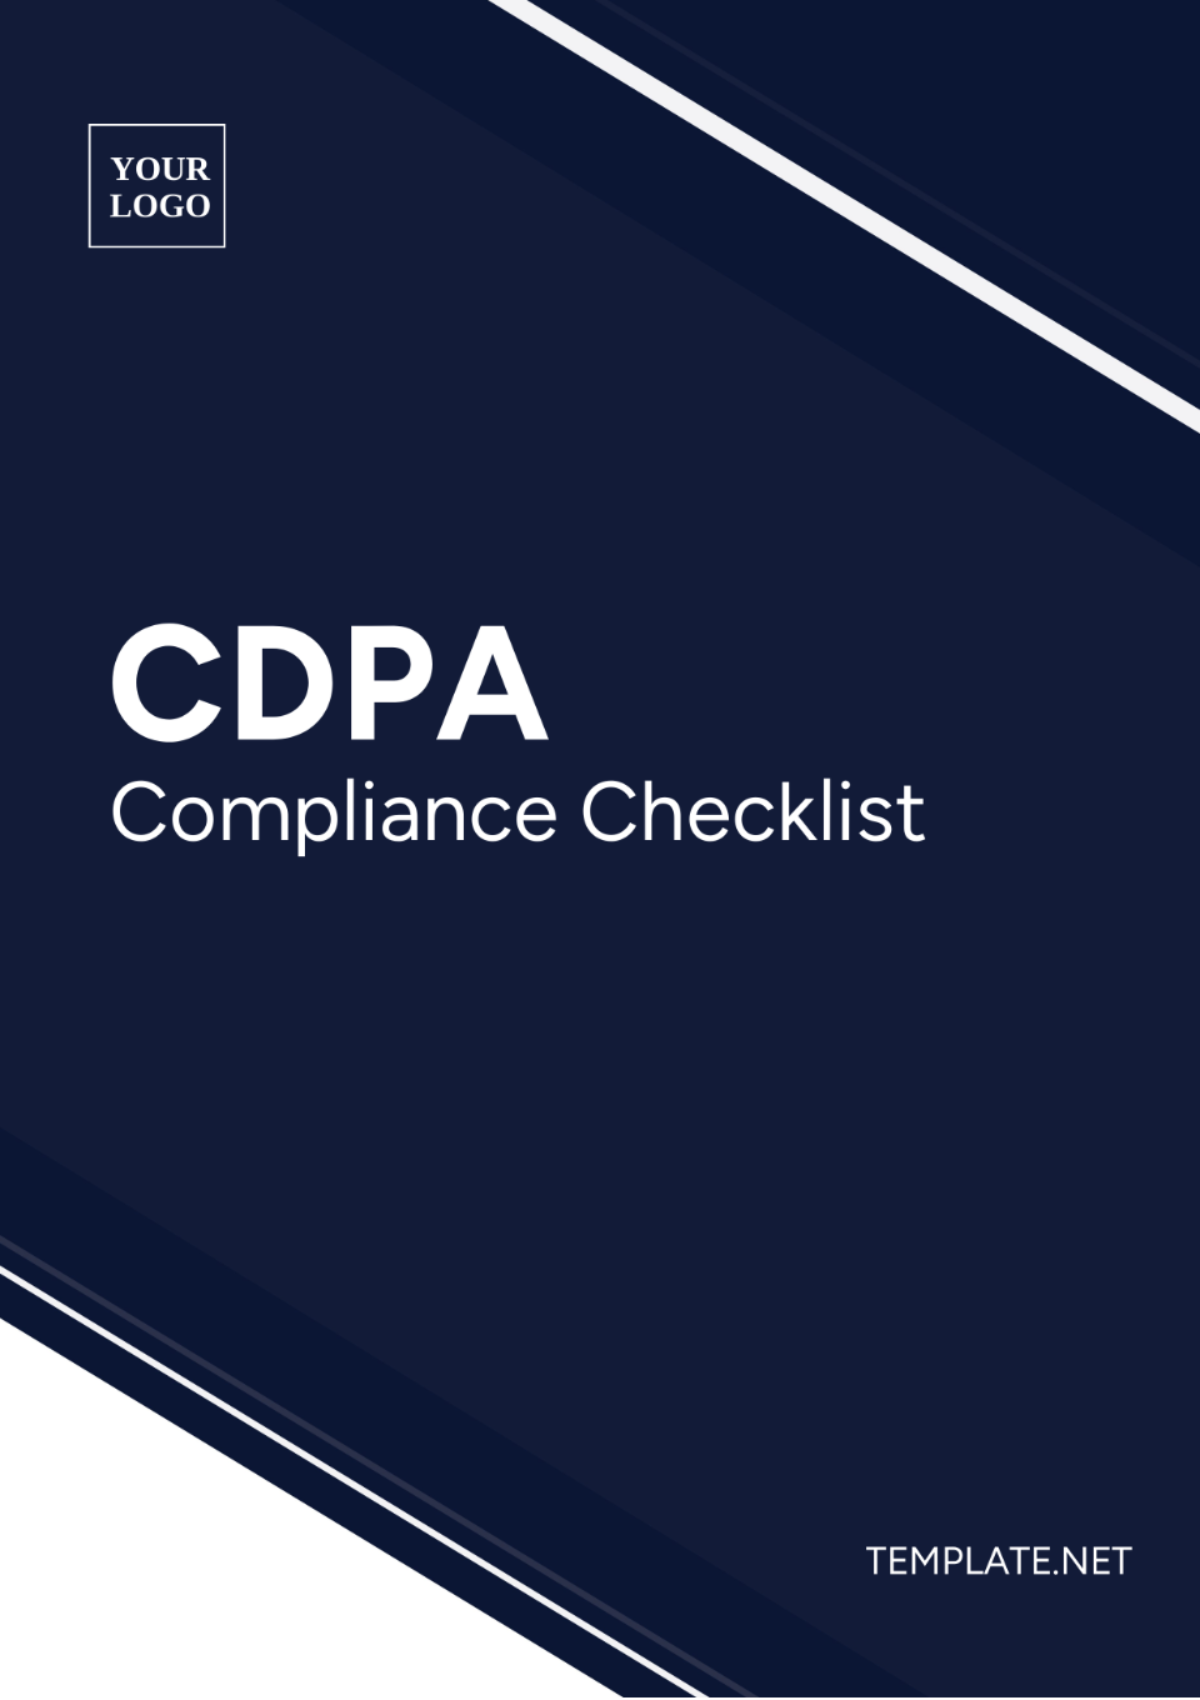 CDPA Compliance Checklist Template